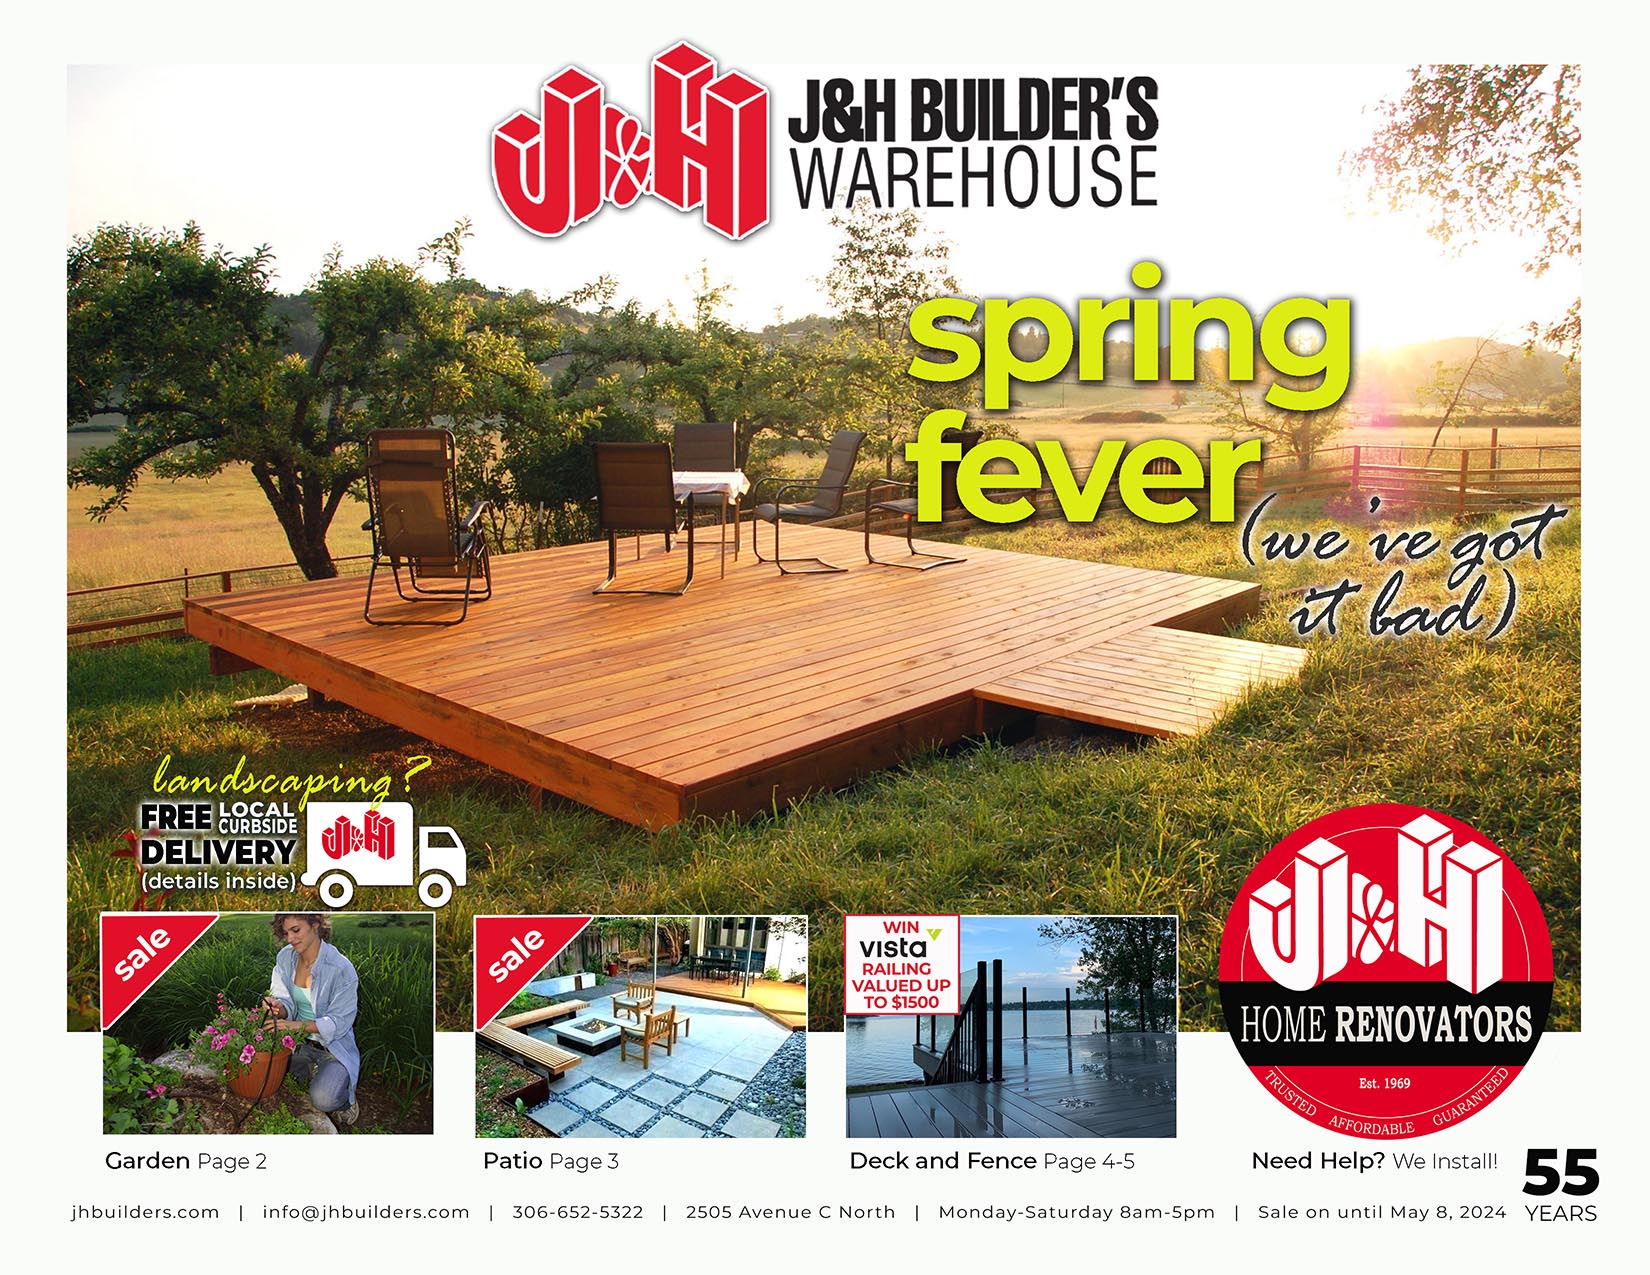 J&H Builder's Warehouse Saskatoon Home Improvement Flyer. SPring Fever April 25 - May 8, 2024